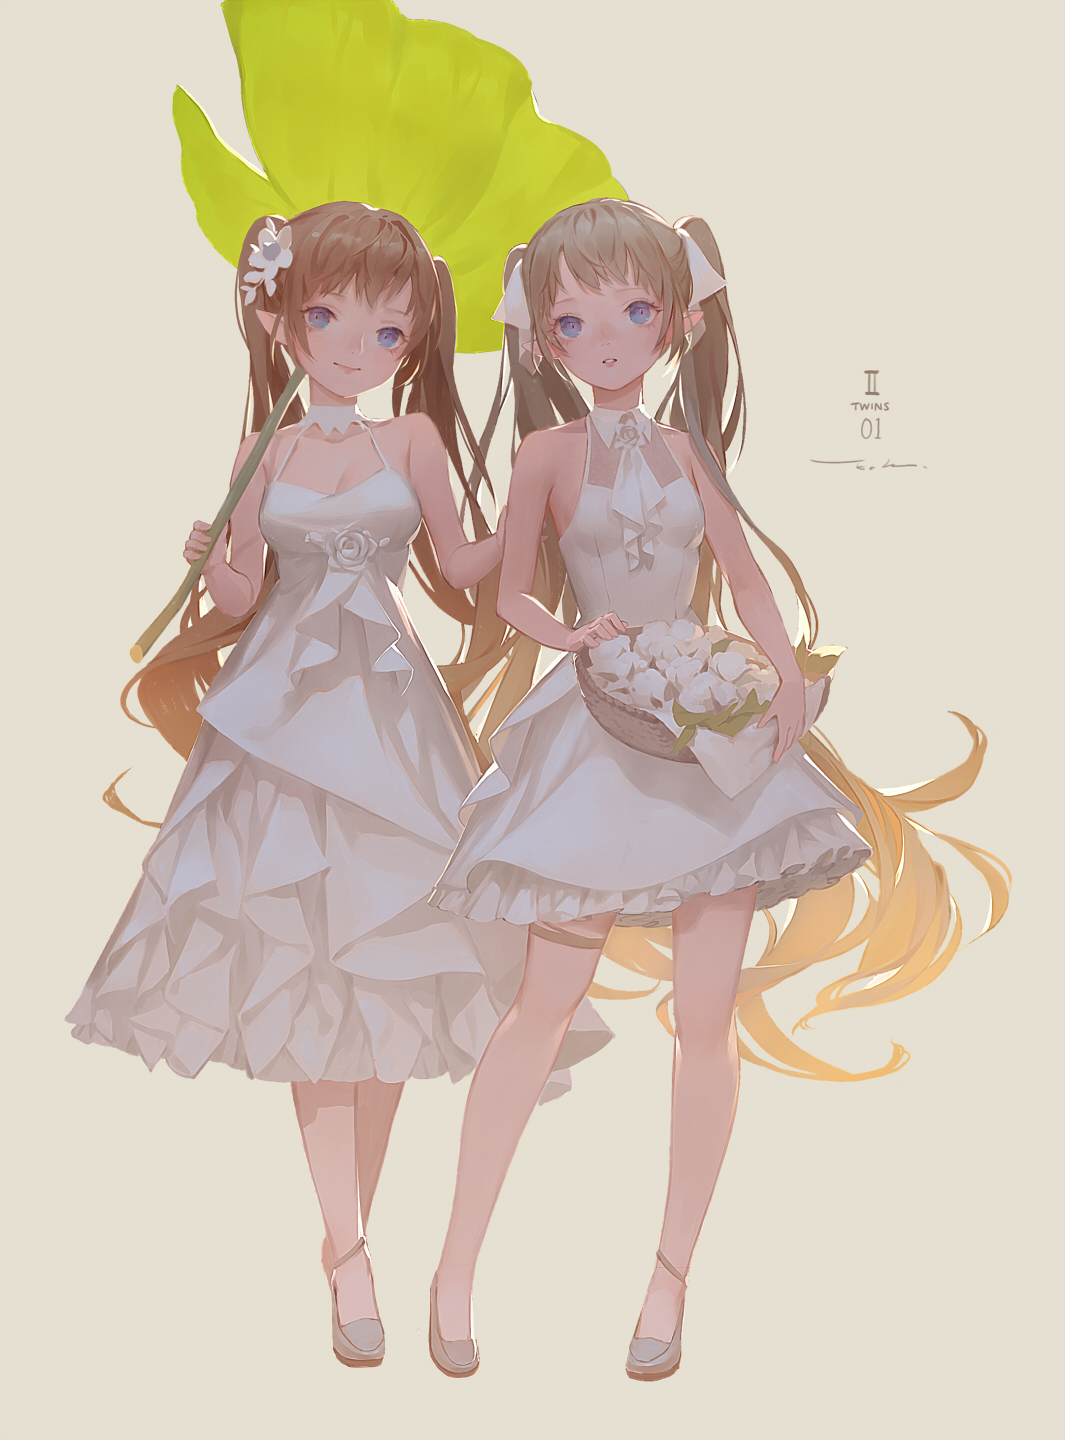 Anime Twins Render by Nanavichan on DeviantArt